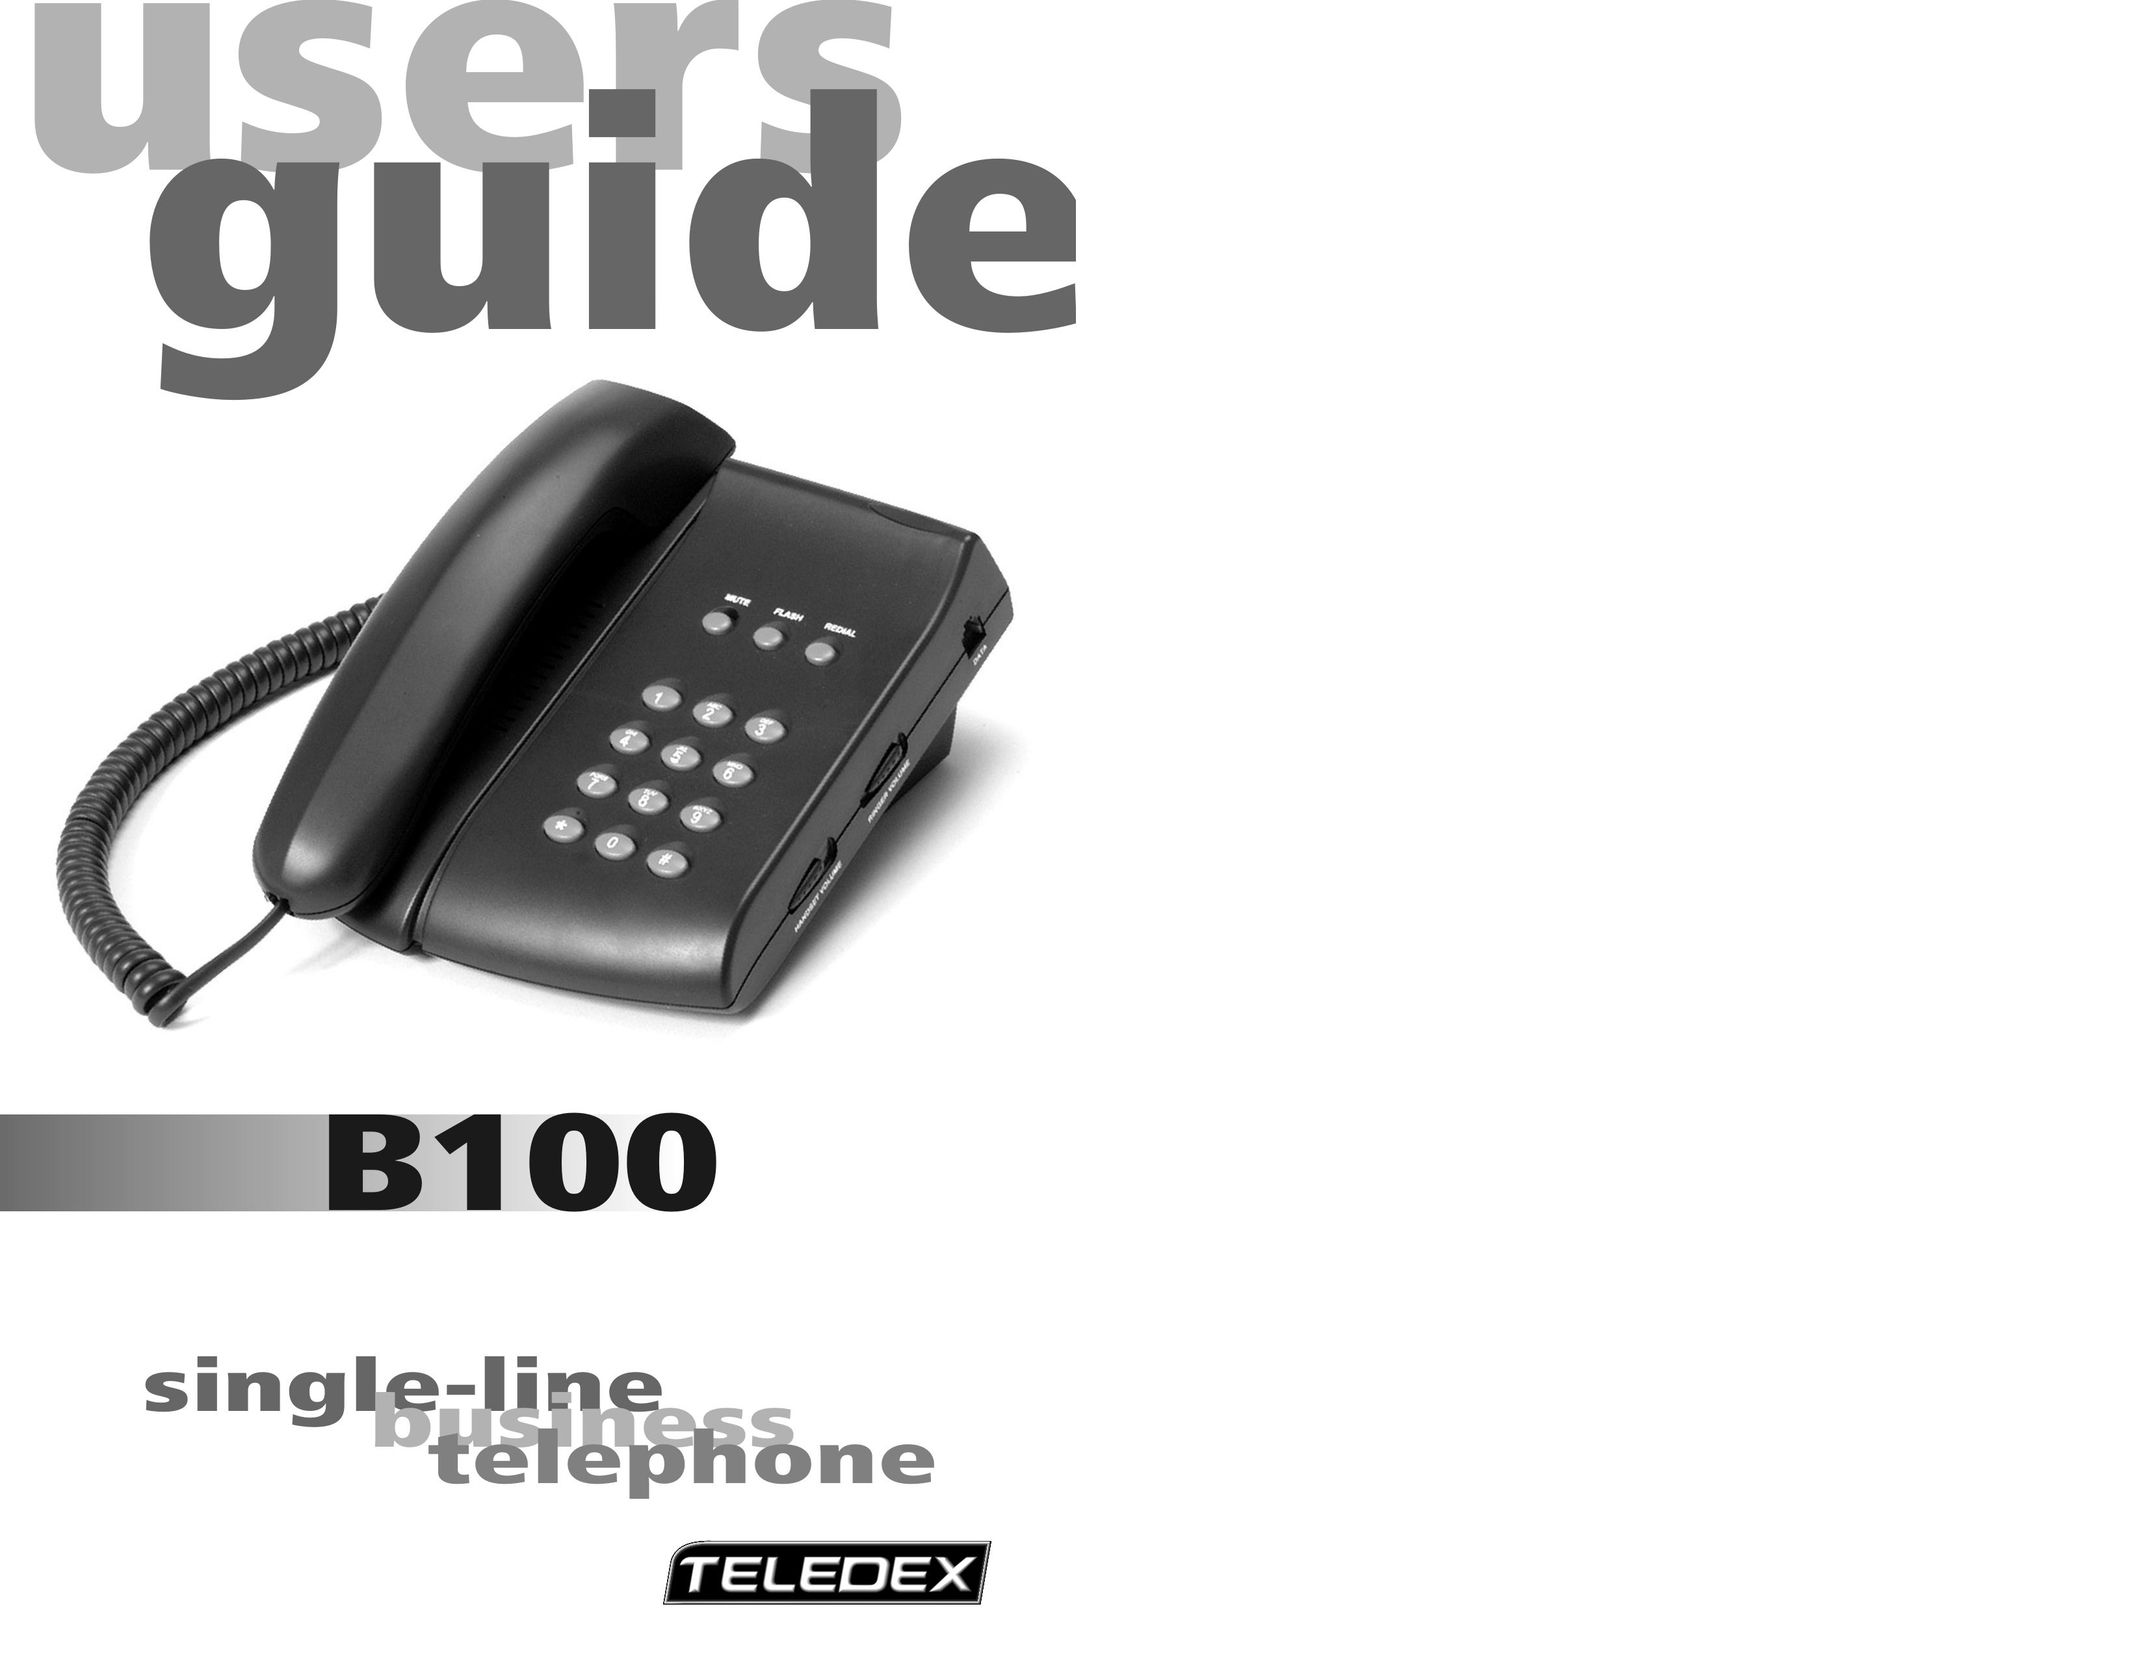 Teledex B100 Telephone User Manual